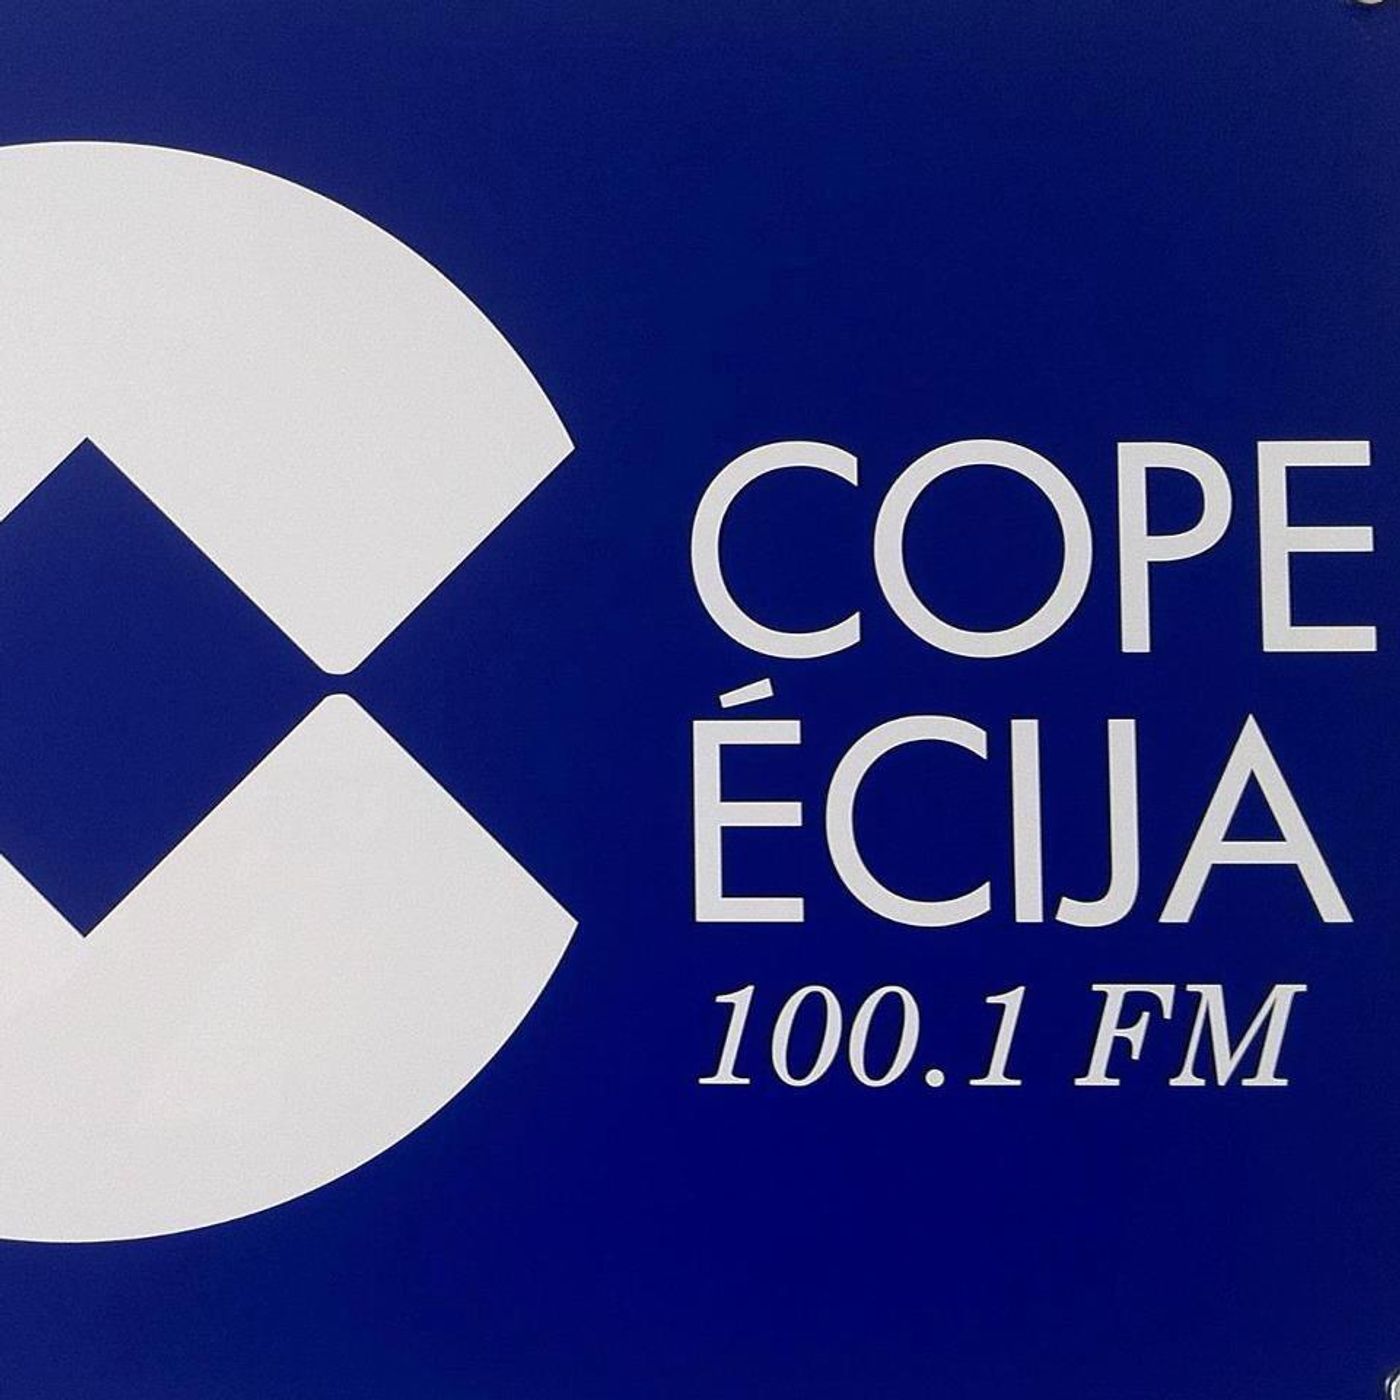 Cope Écija 100.1 Fm - Entrevistas